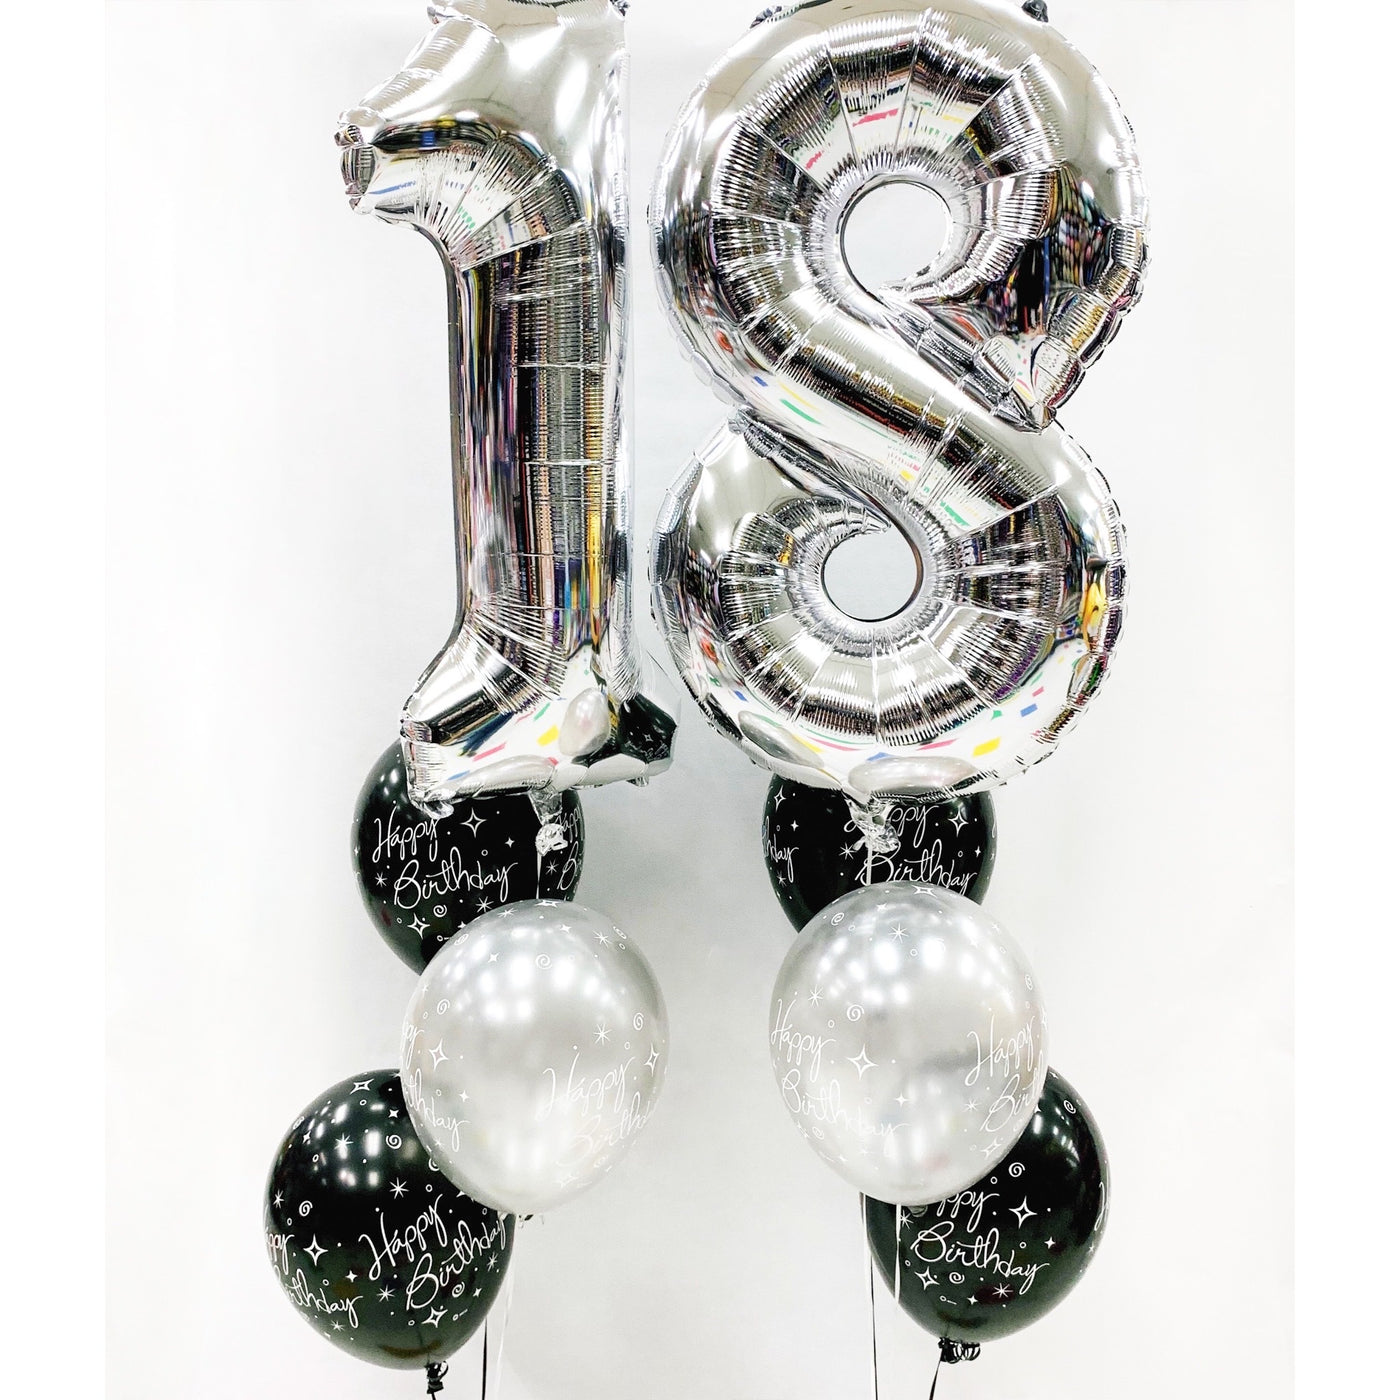 Jumbo Milestone Number Balloons with Latex